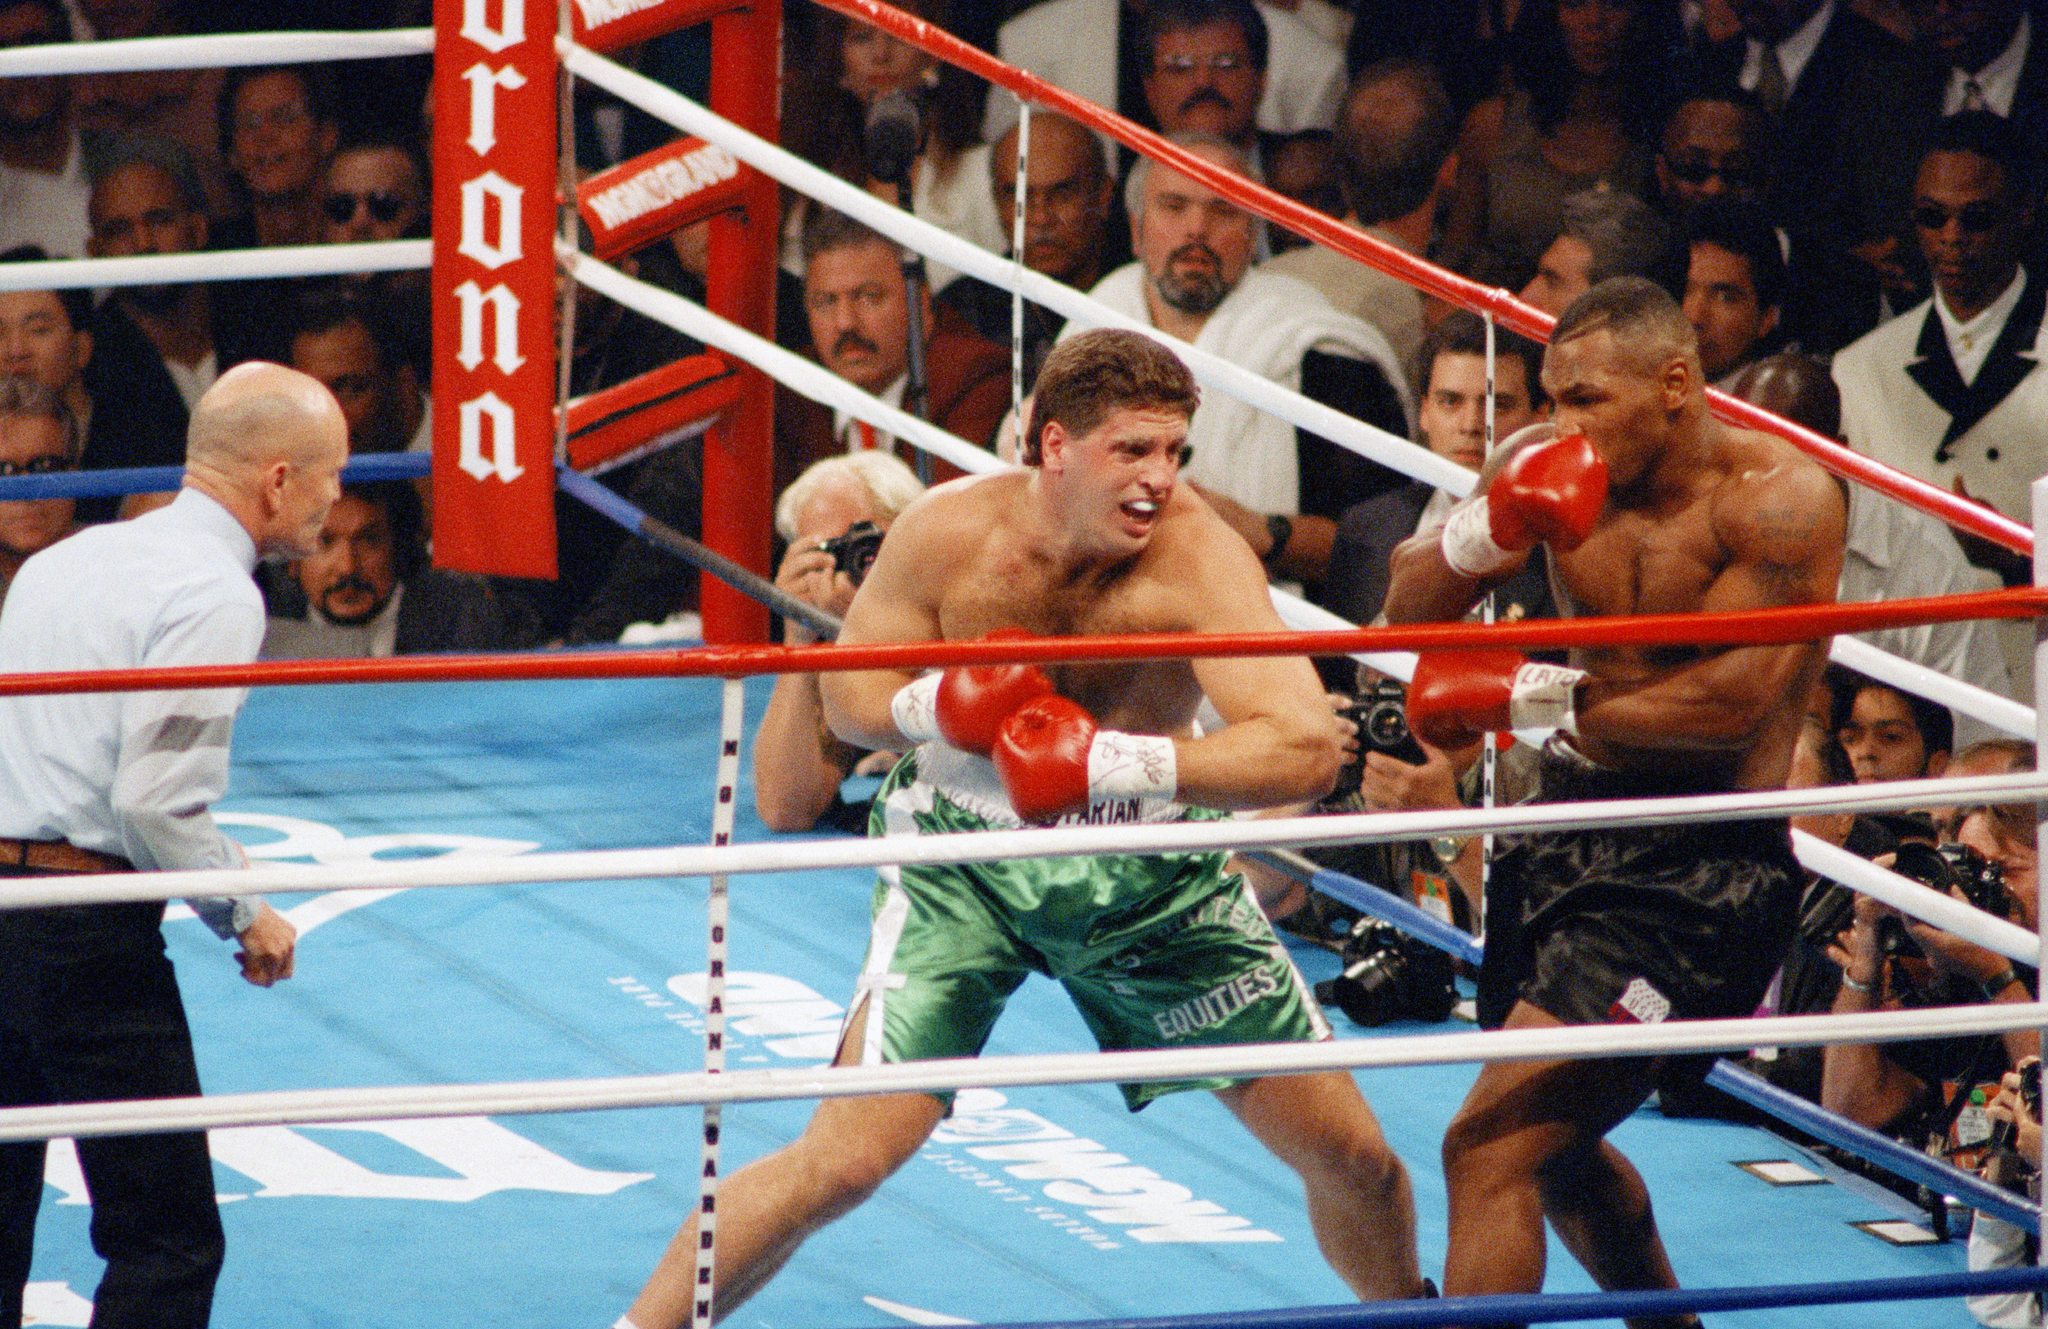 McNeeley against Tyson in 1995